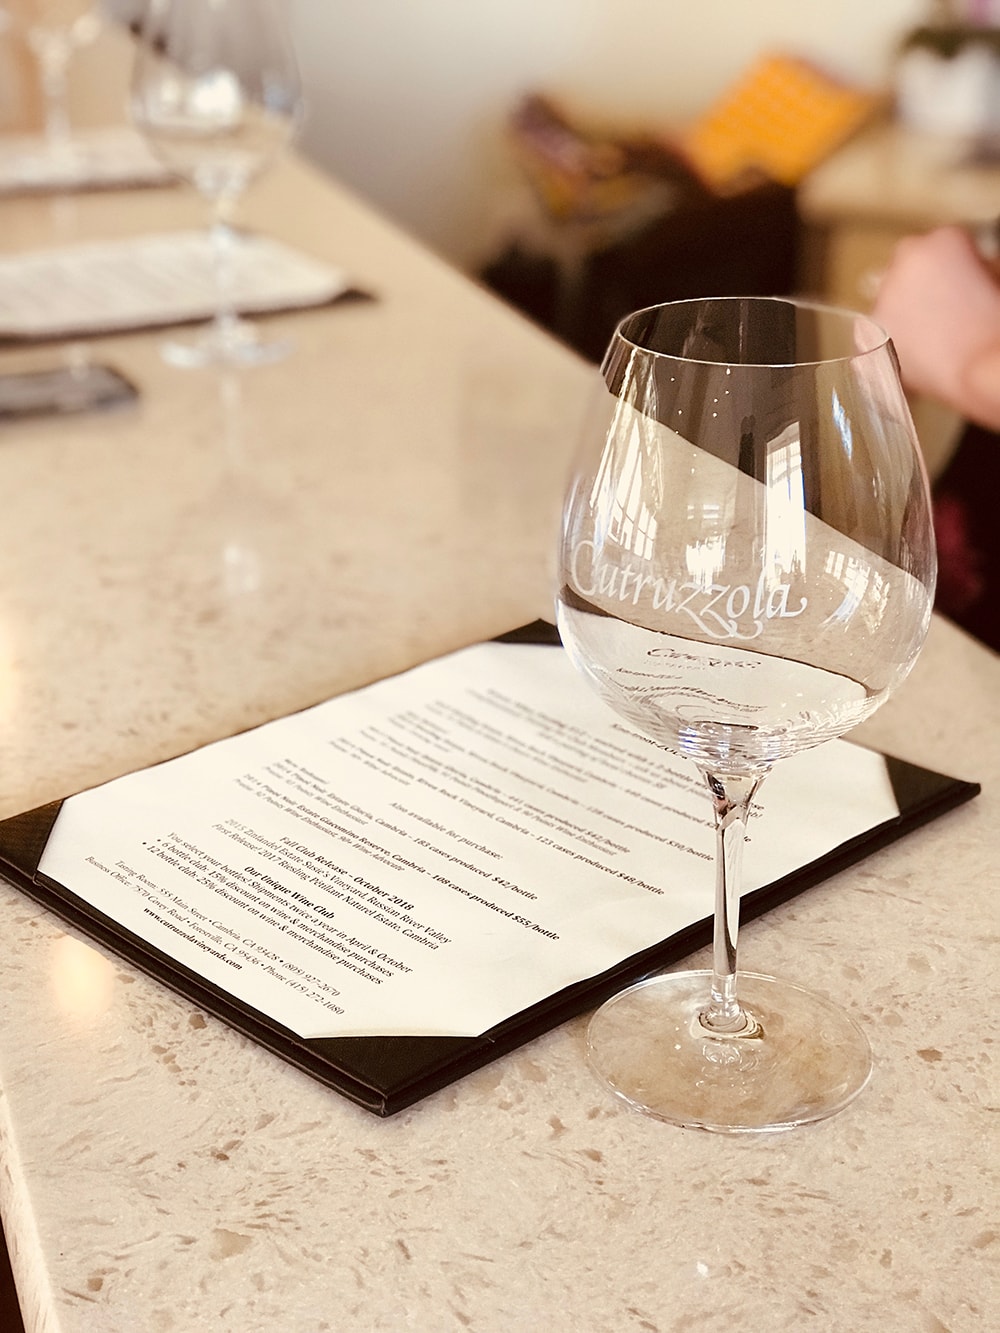 Cutruzola Vineyards menu and wine glass